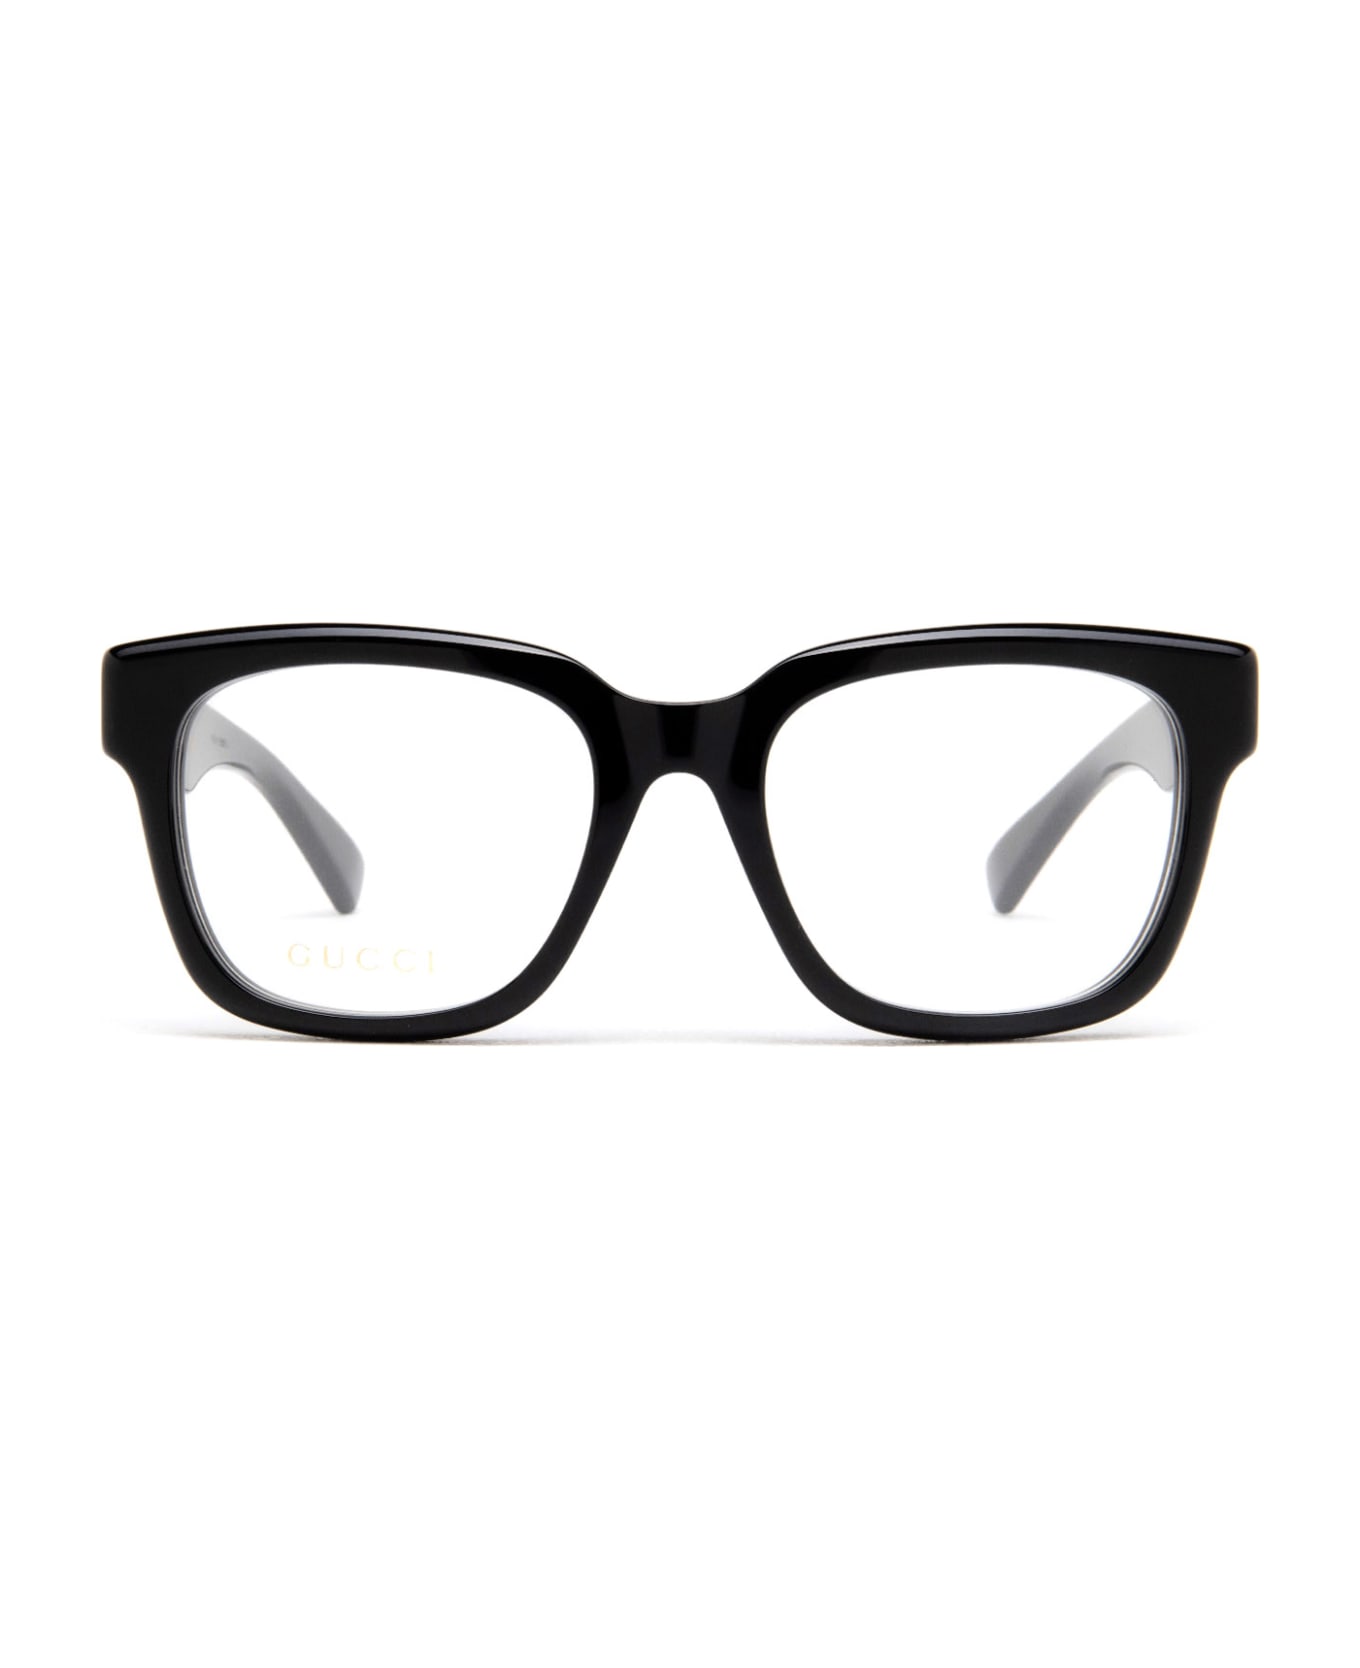 Gucci Eyewear Gg1176o Black Glasses - Black